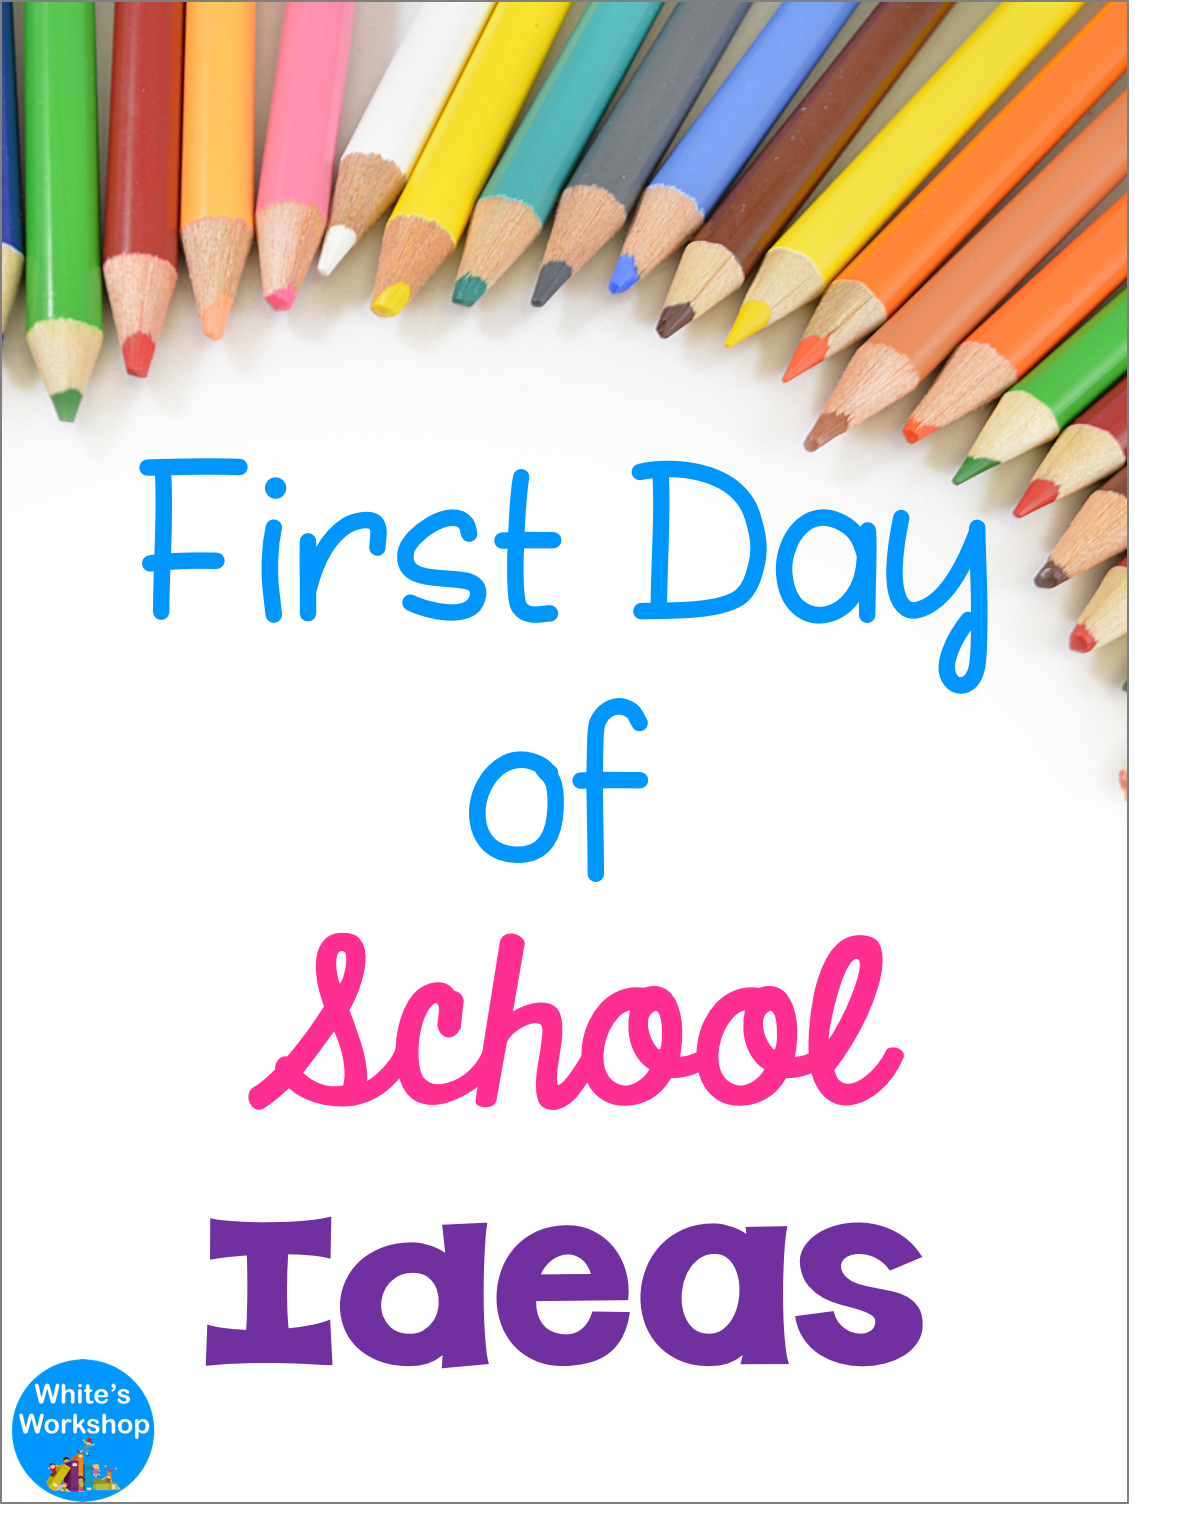 White's Workshop: First Day of School Ideas